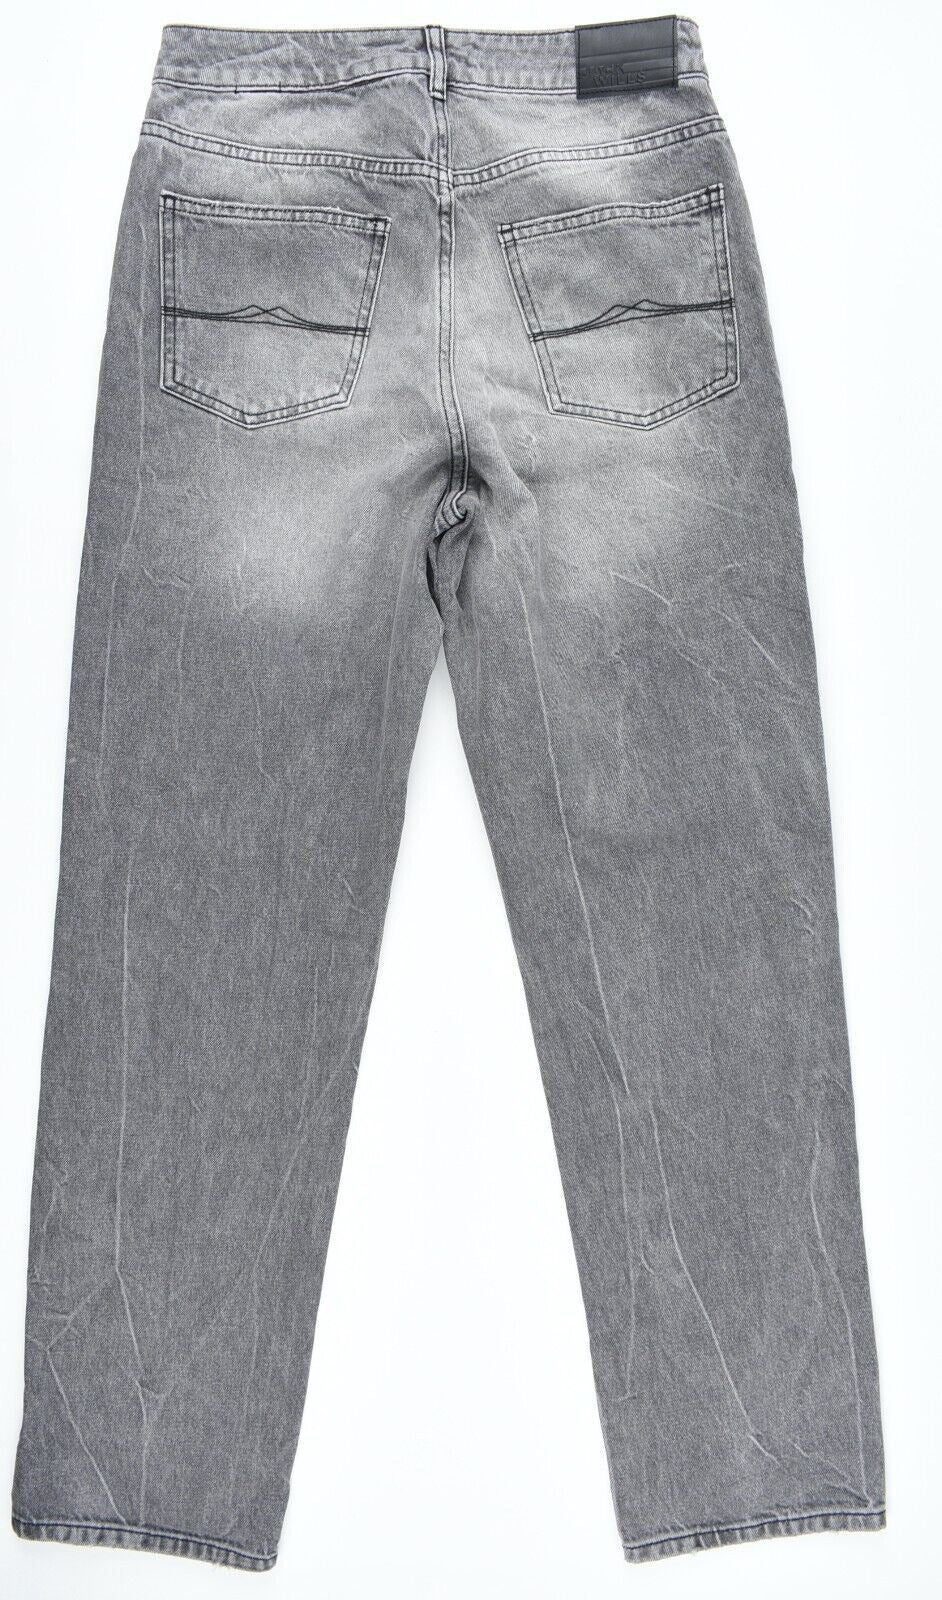 JACK WILLS Women's MADDISON High Rise Straight Leg Jeans, Grey, size W28 R